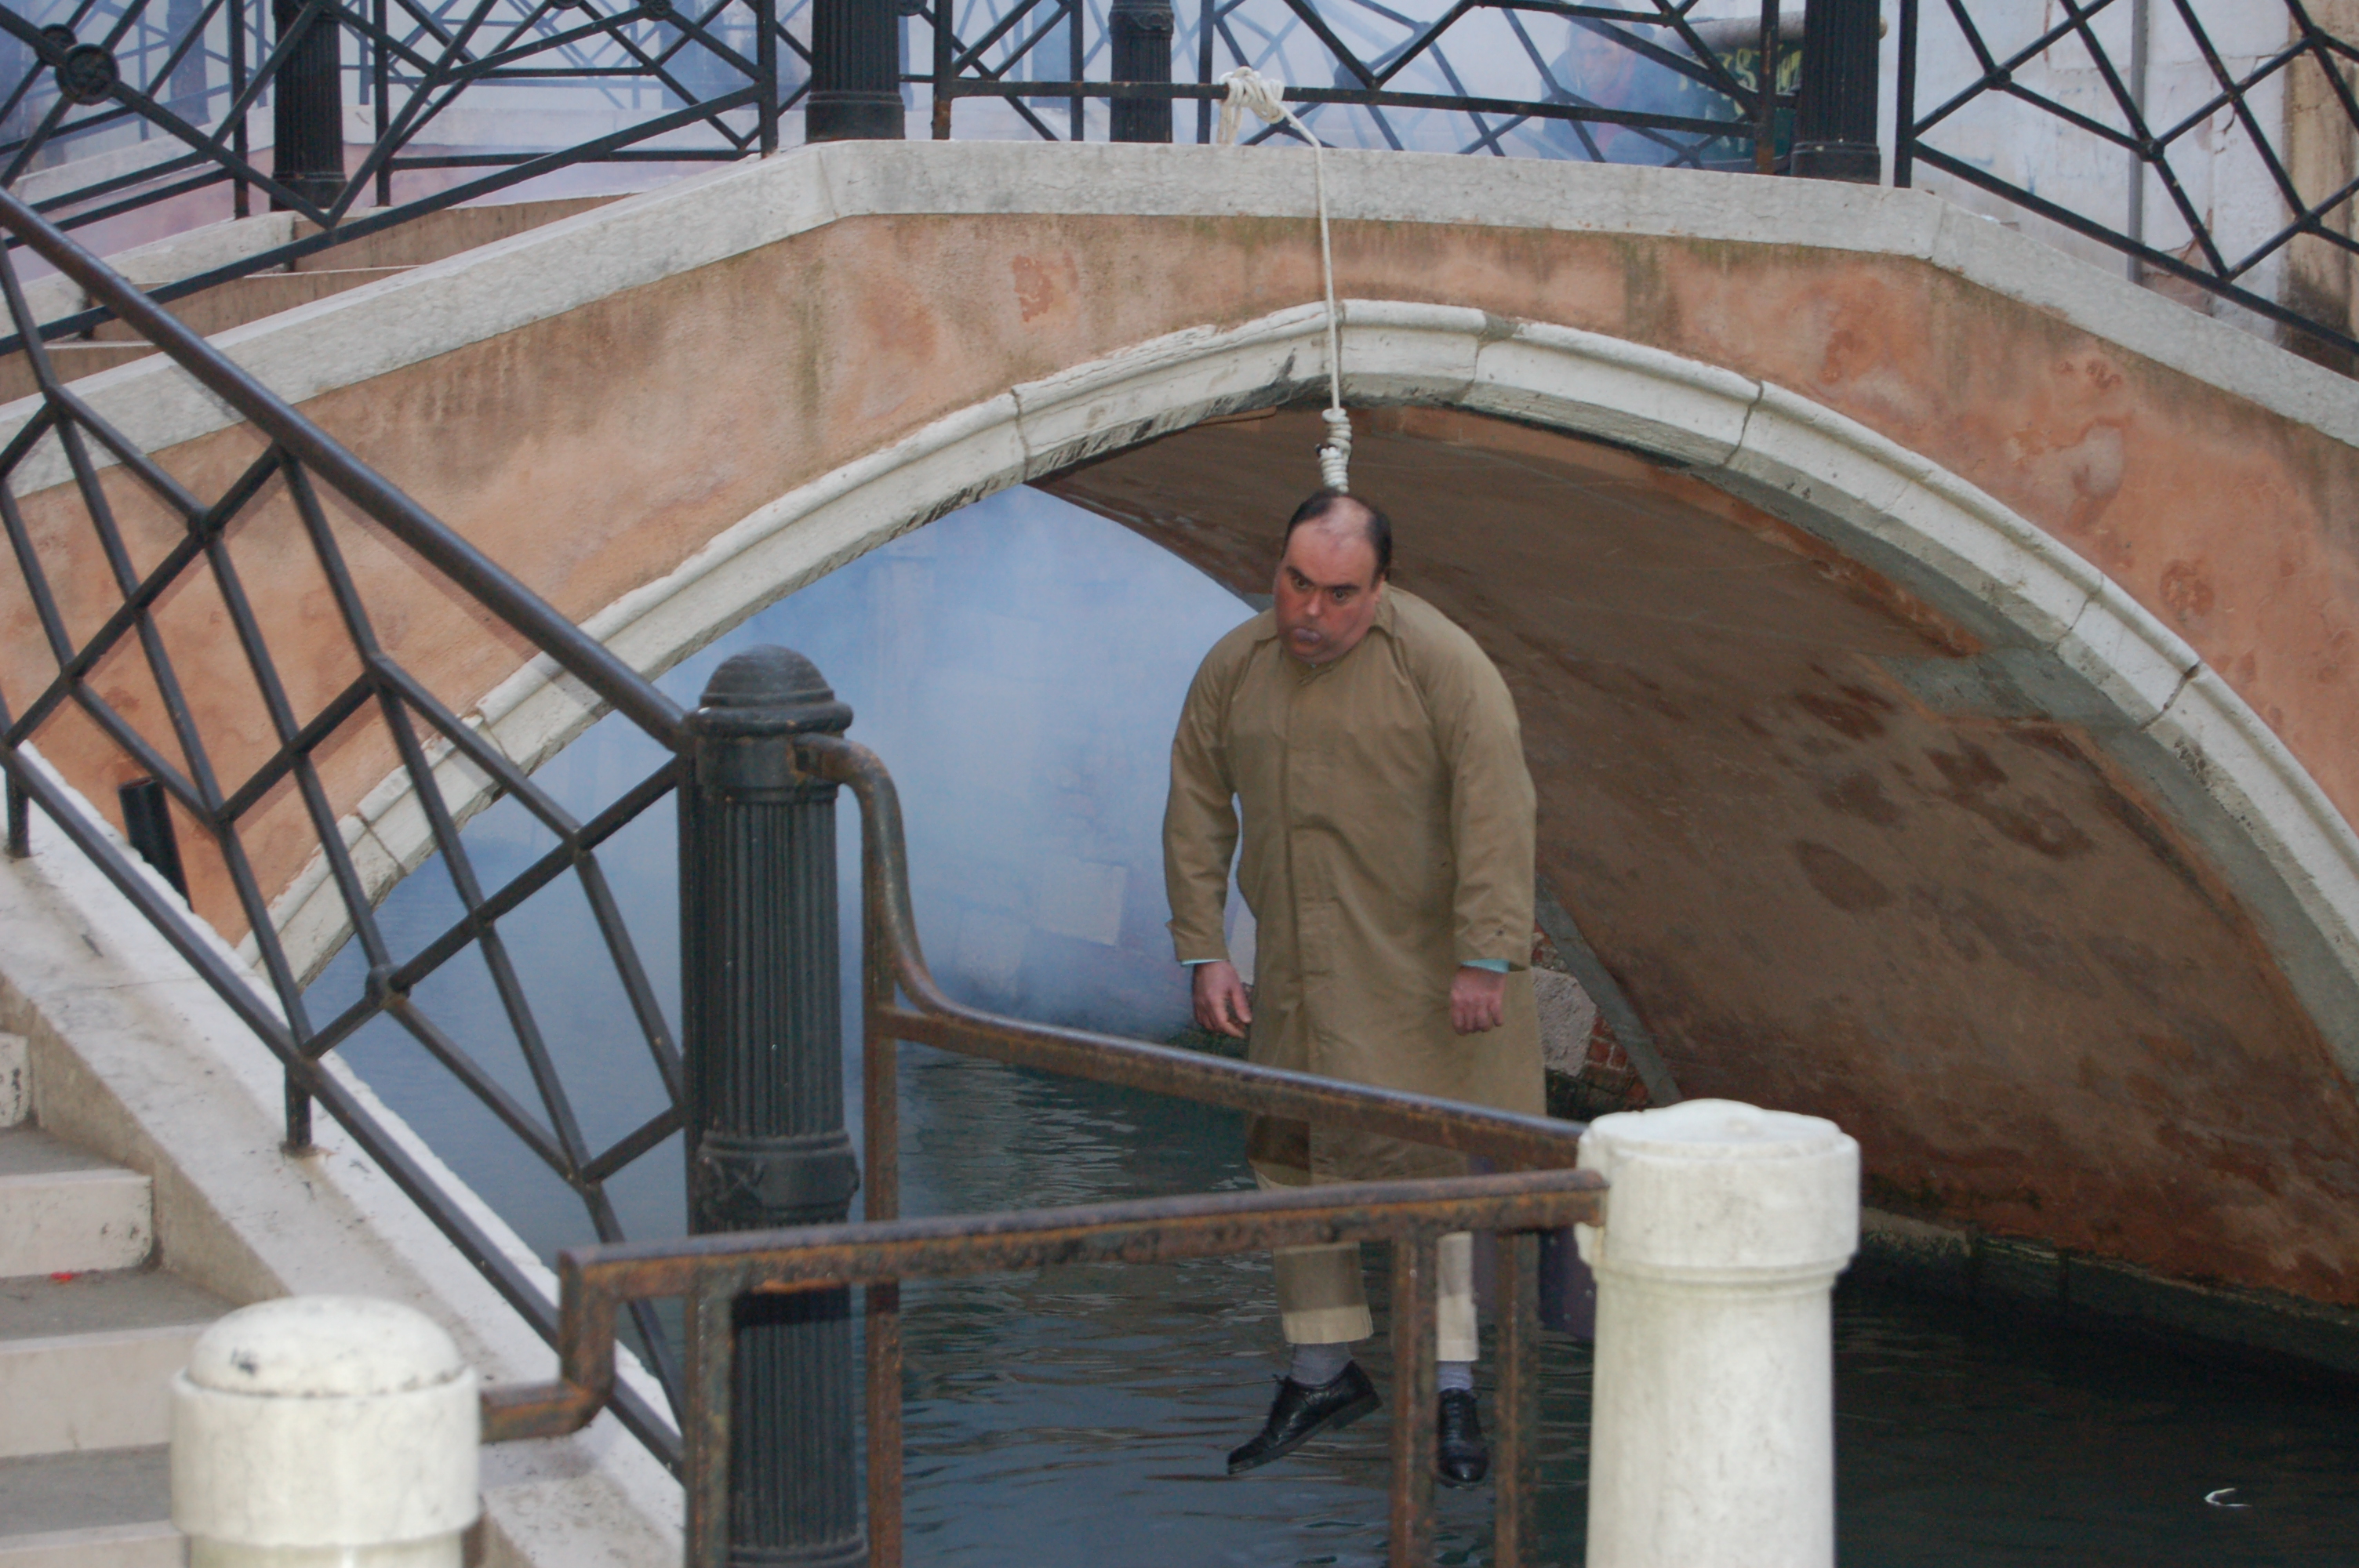 Dominic Borrelli 'Just hanging around'. On location in Venice for 'Vaporetto 13'